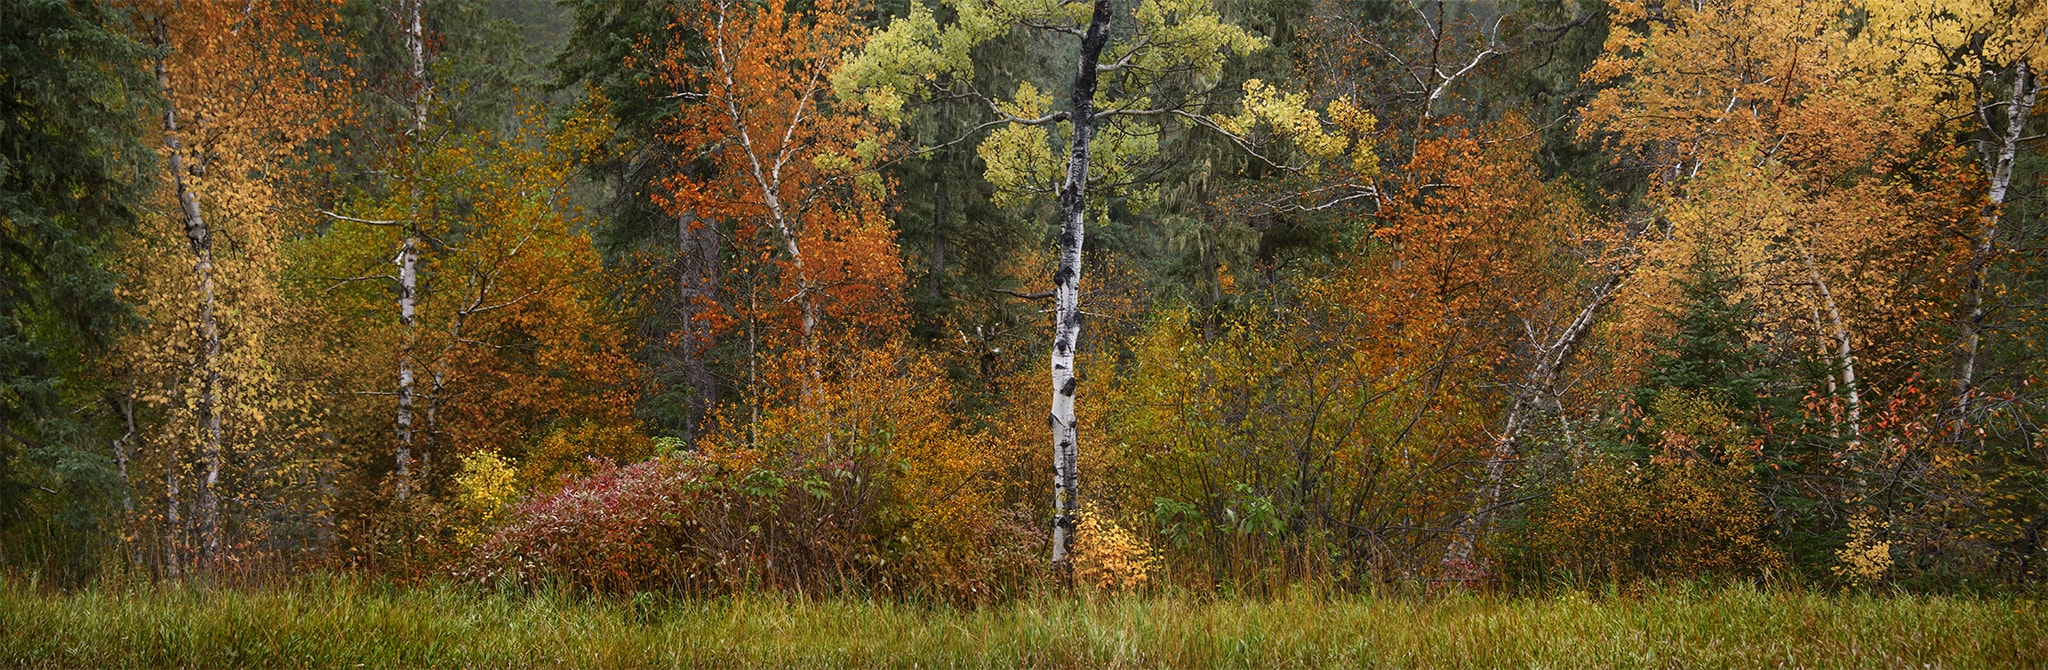 Birch Tree and Fall Foliage